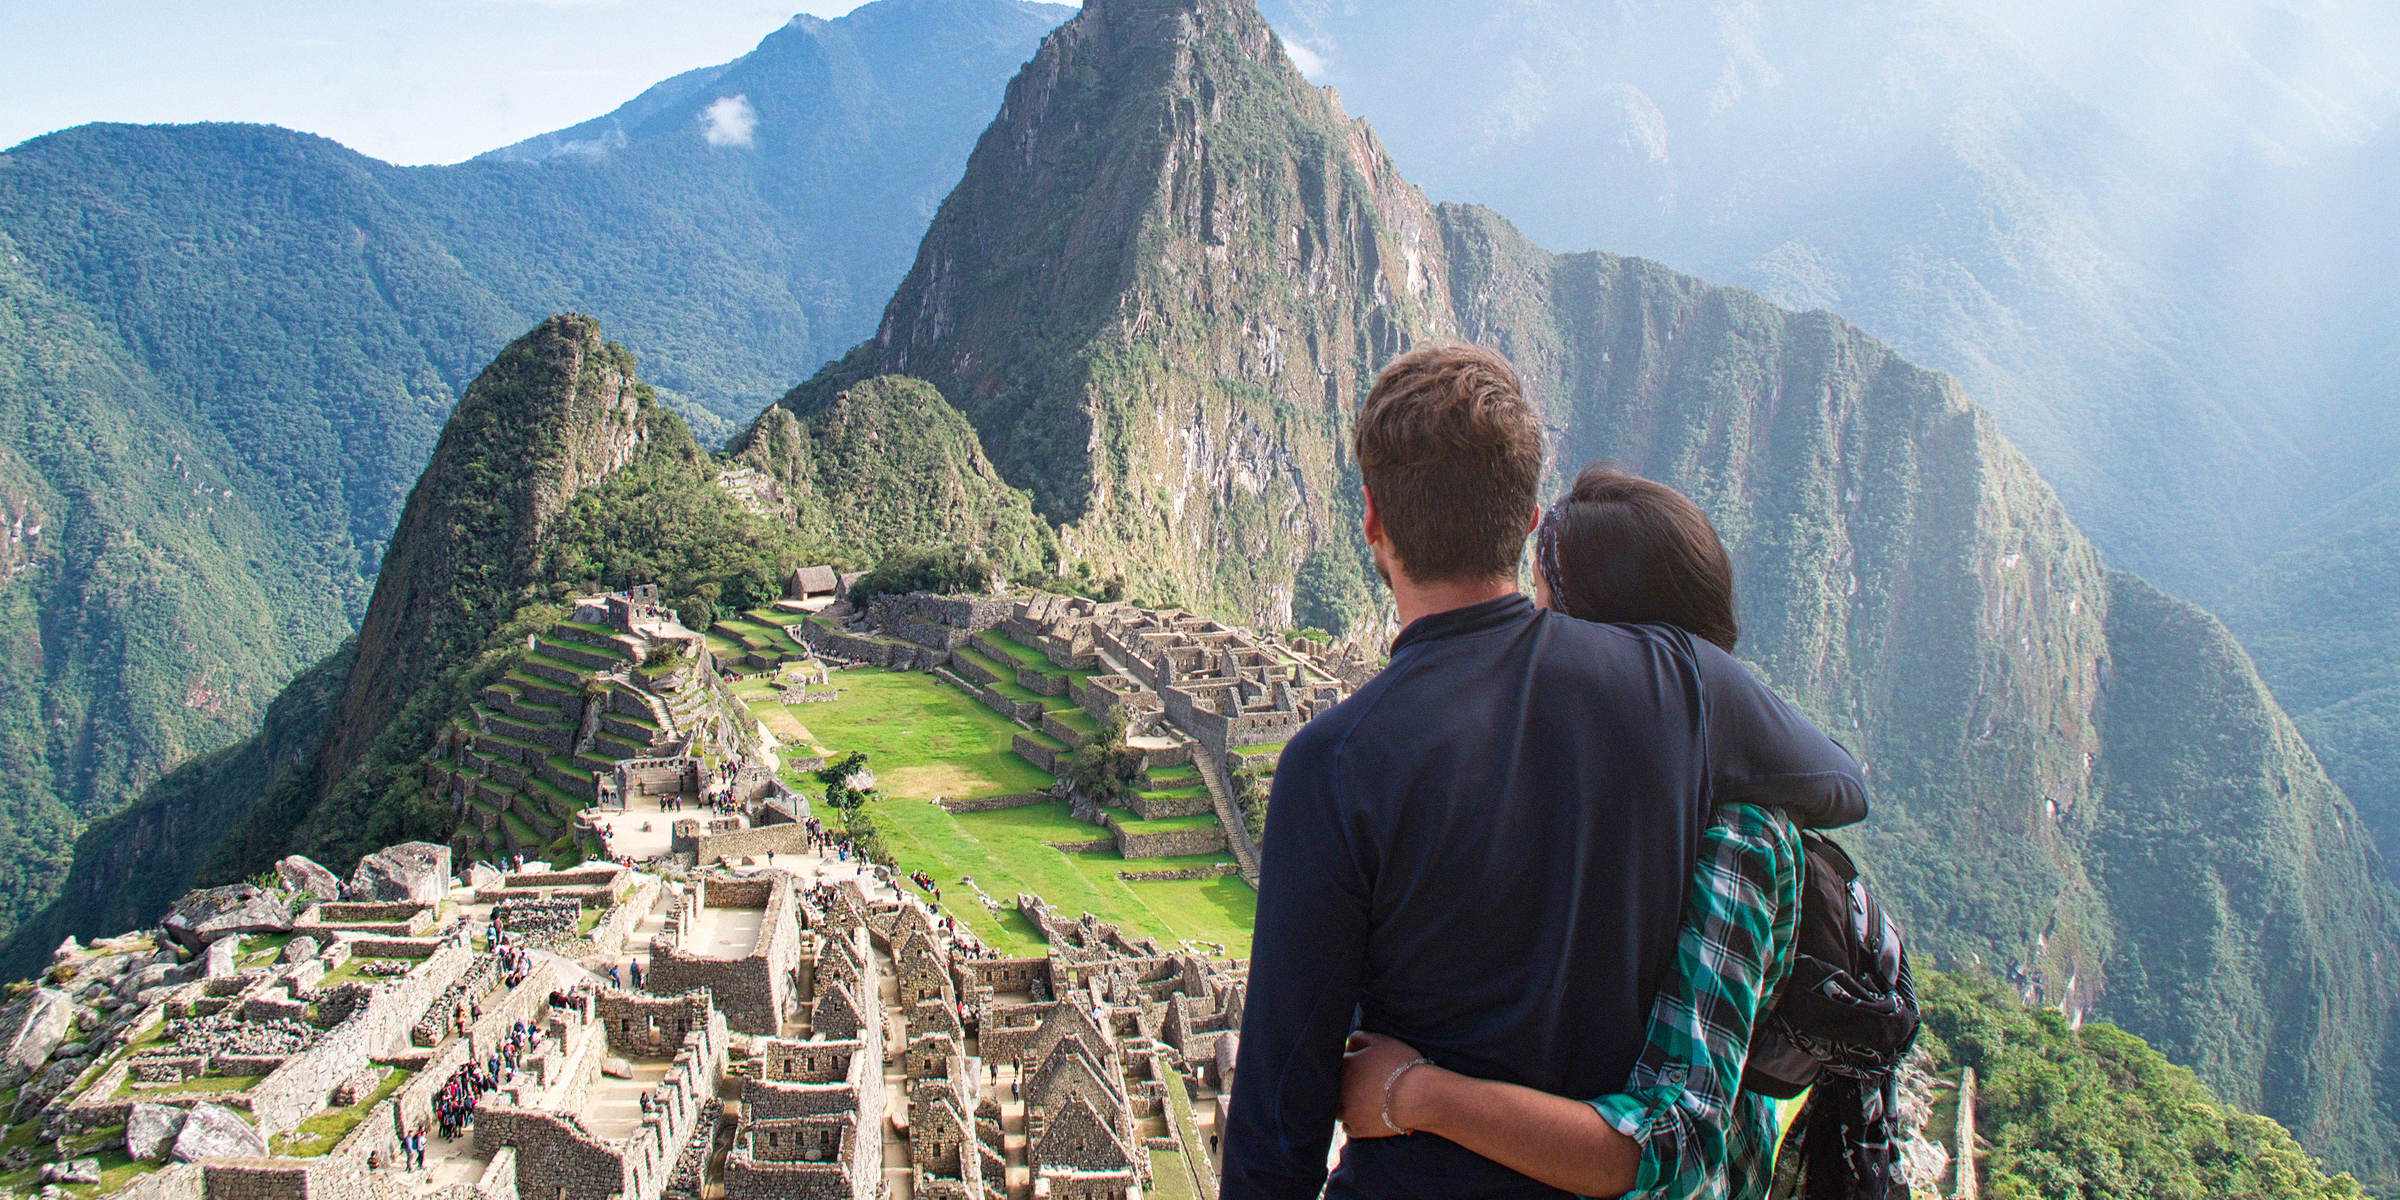 A couple overlooking Machu Picchu | Source: Shutterstock